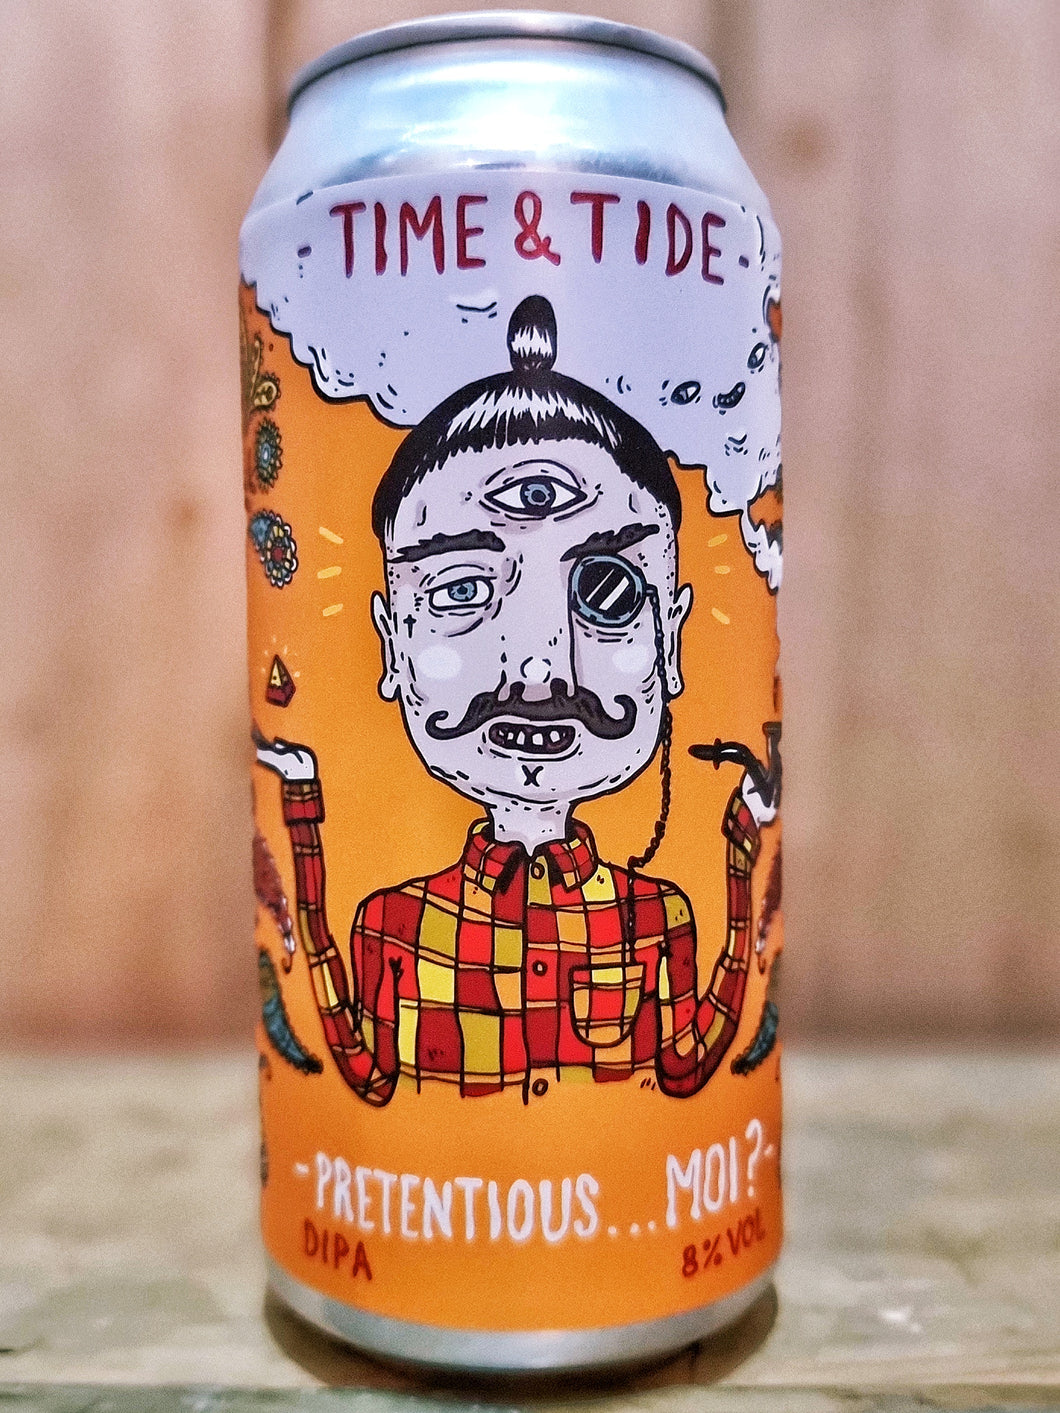 Time & Tide - Pretentious Moi? - ALE SALE BBE AUG22